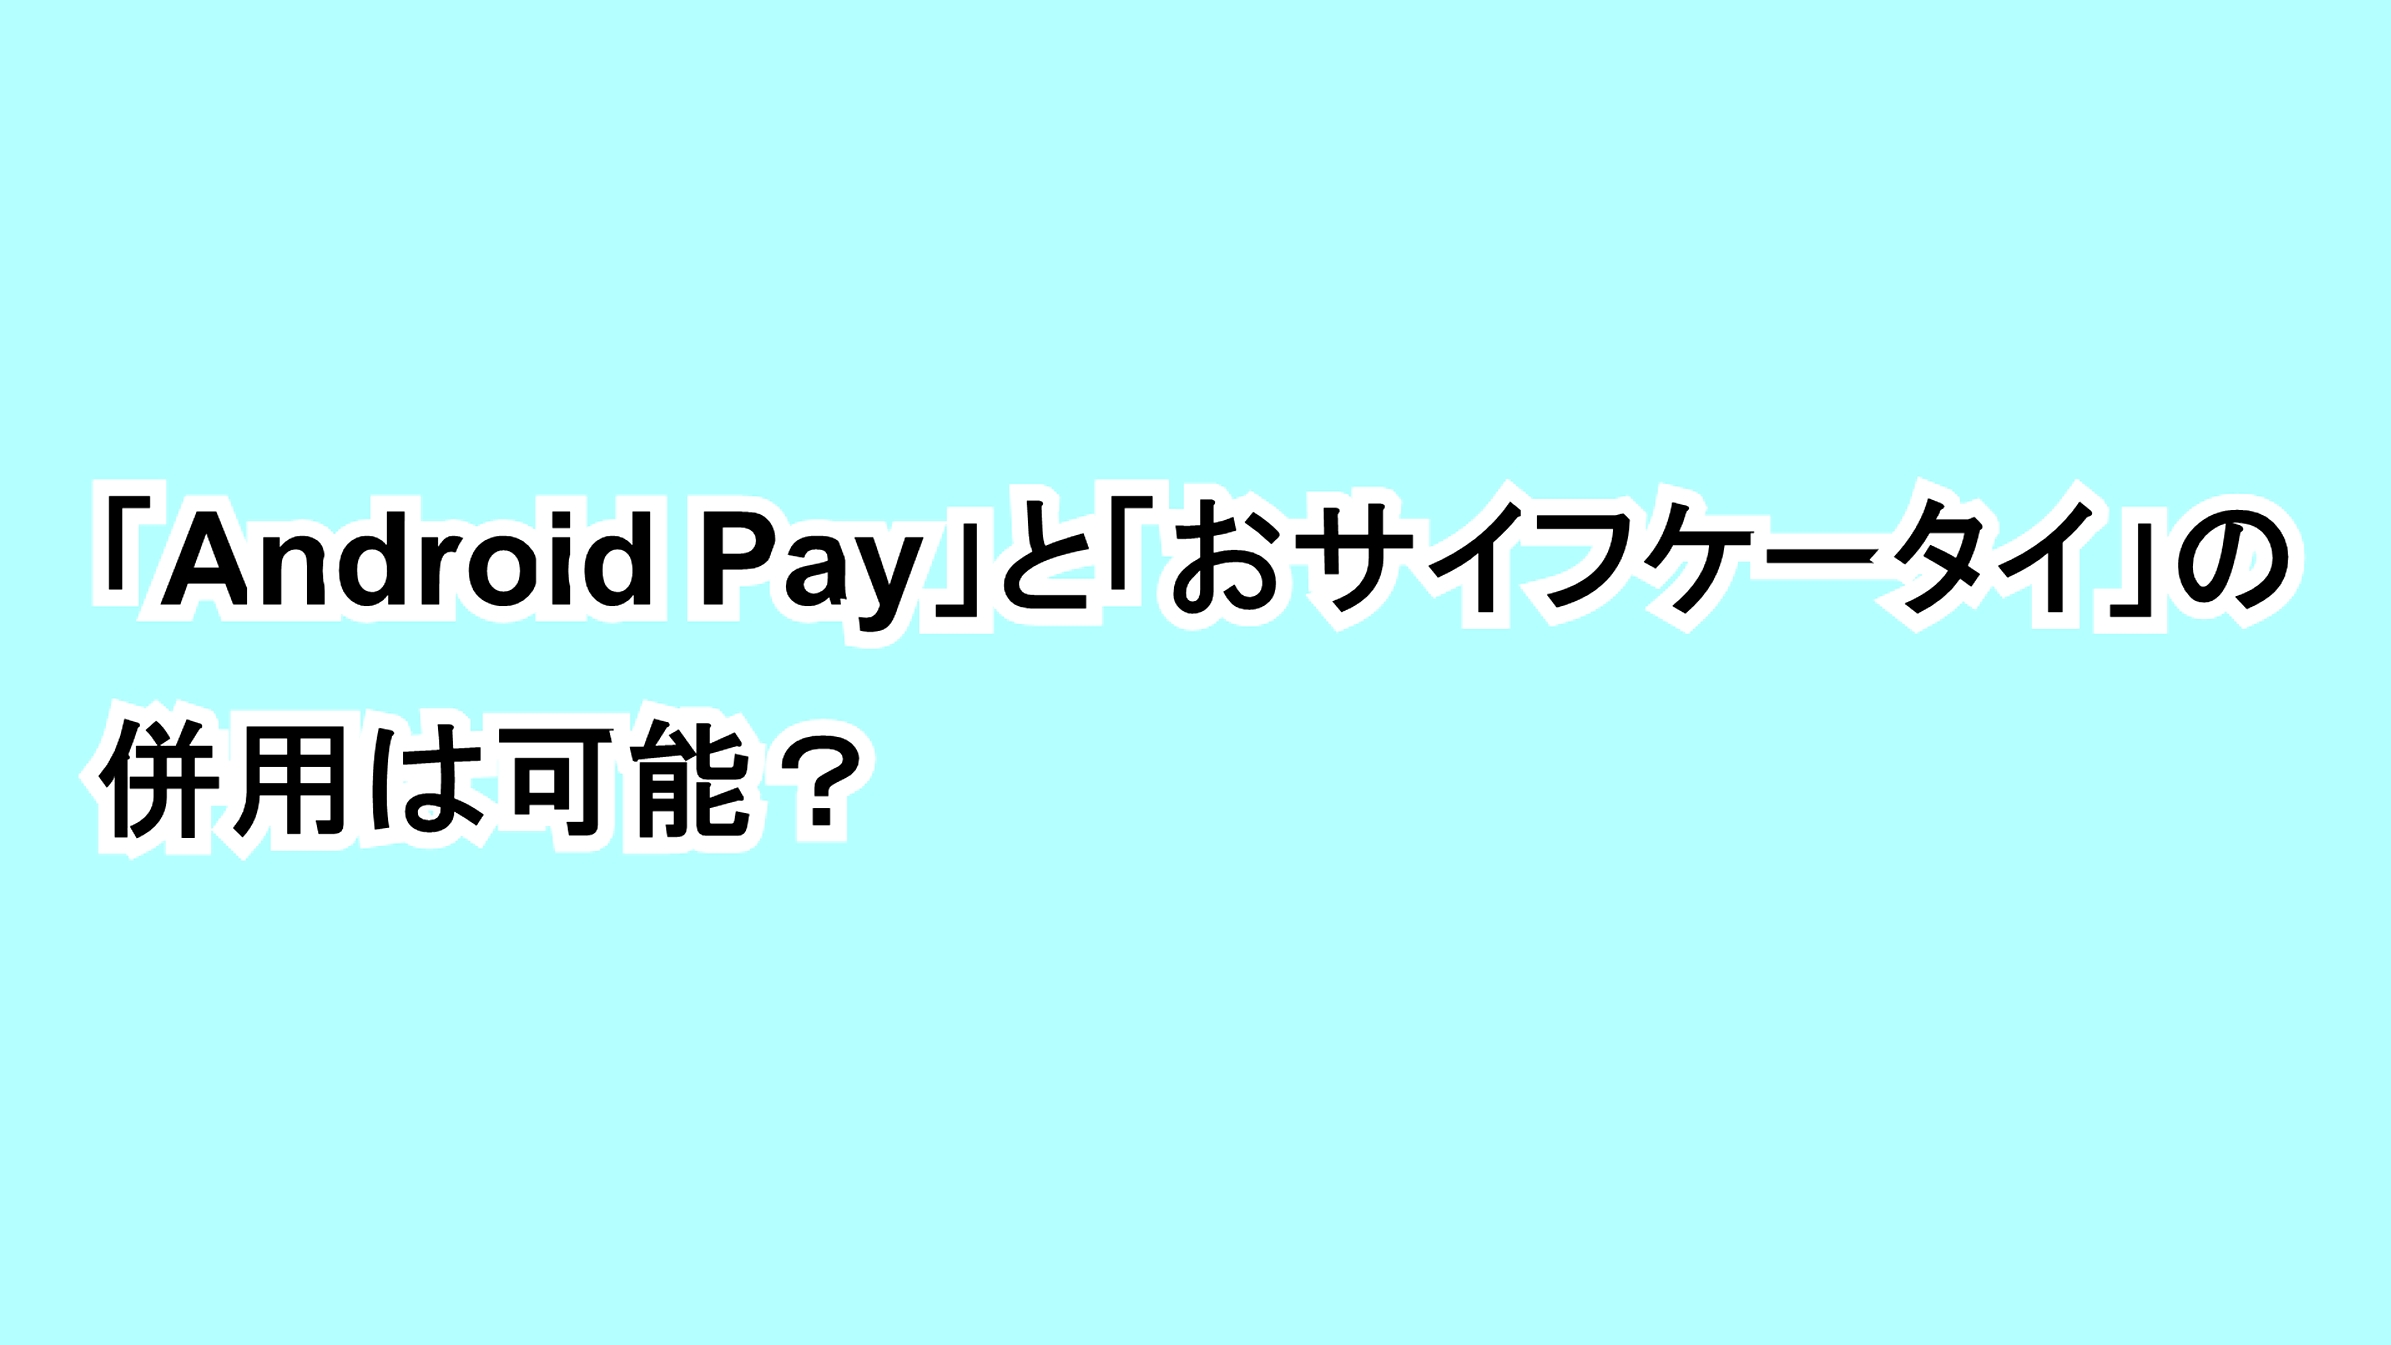 「Android Pay」と「おサイフケータイ」の併用は可能？